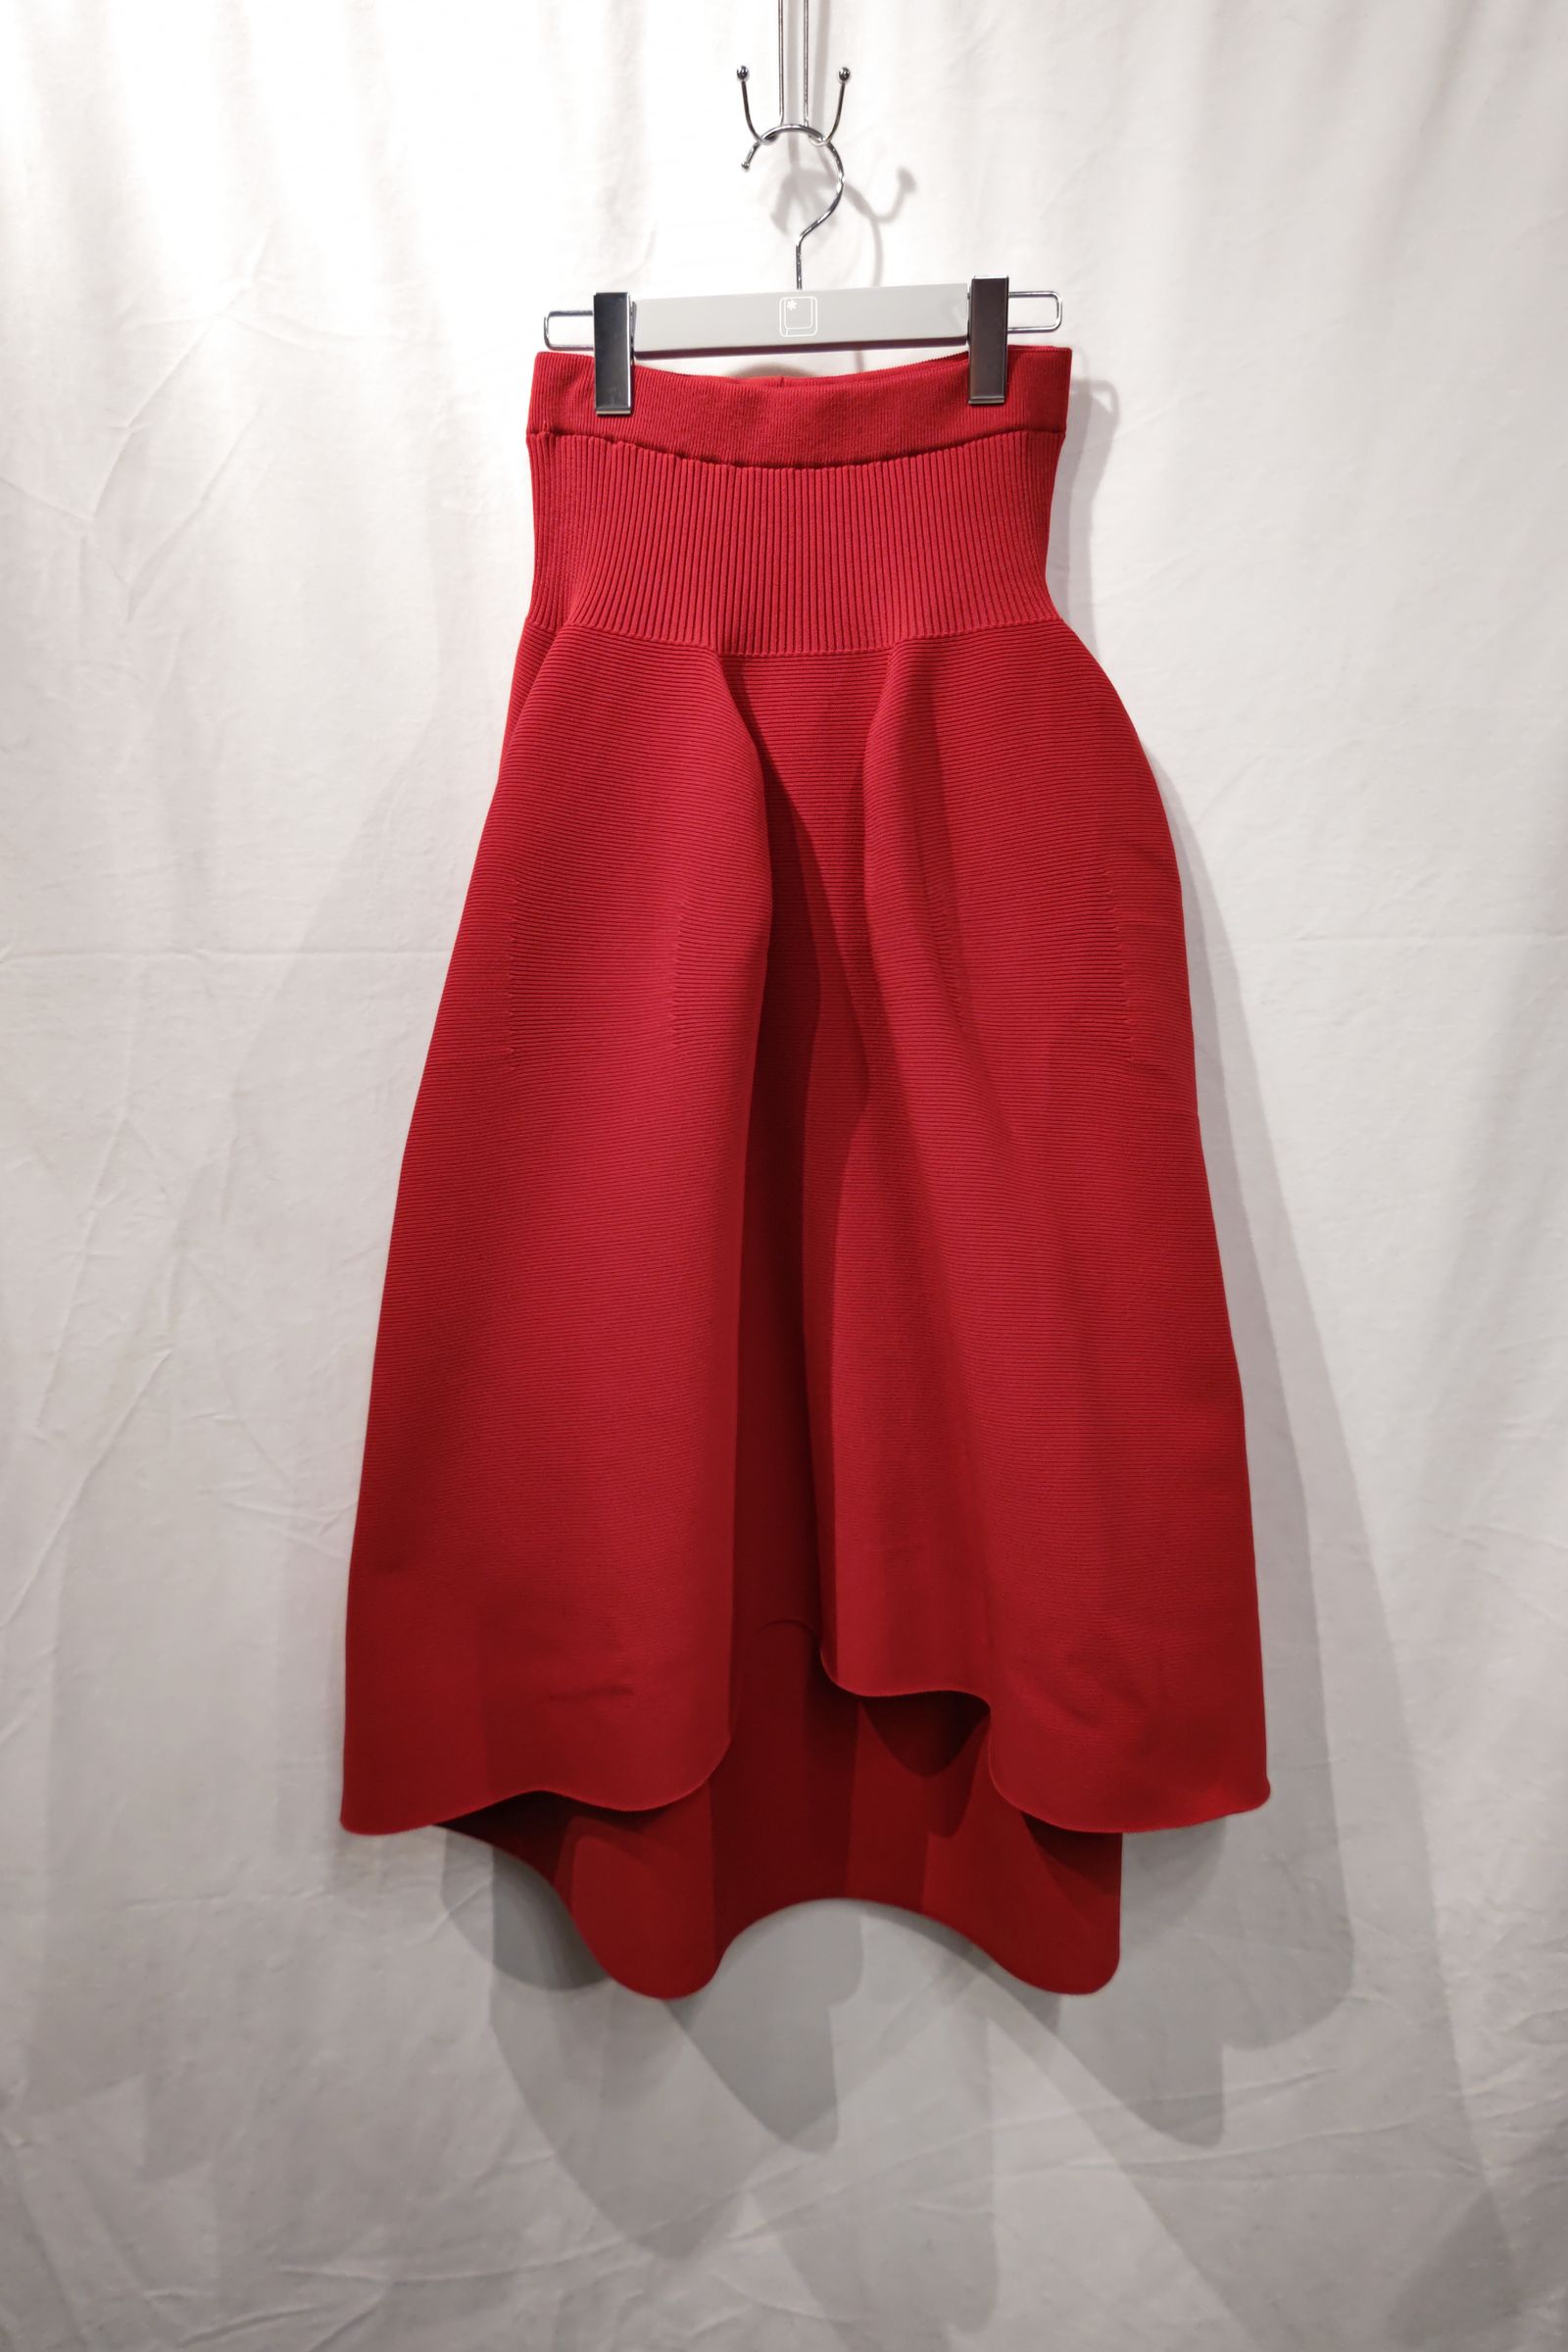 CFCL - pottery skirt 3 -red- 23ss women | asterisk